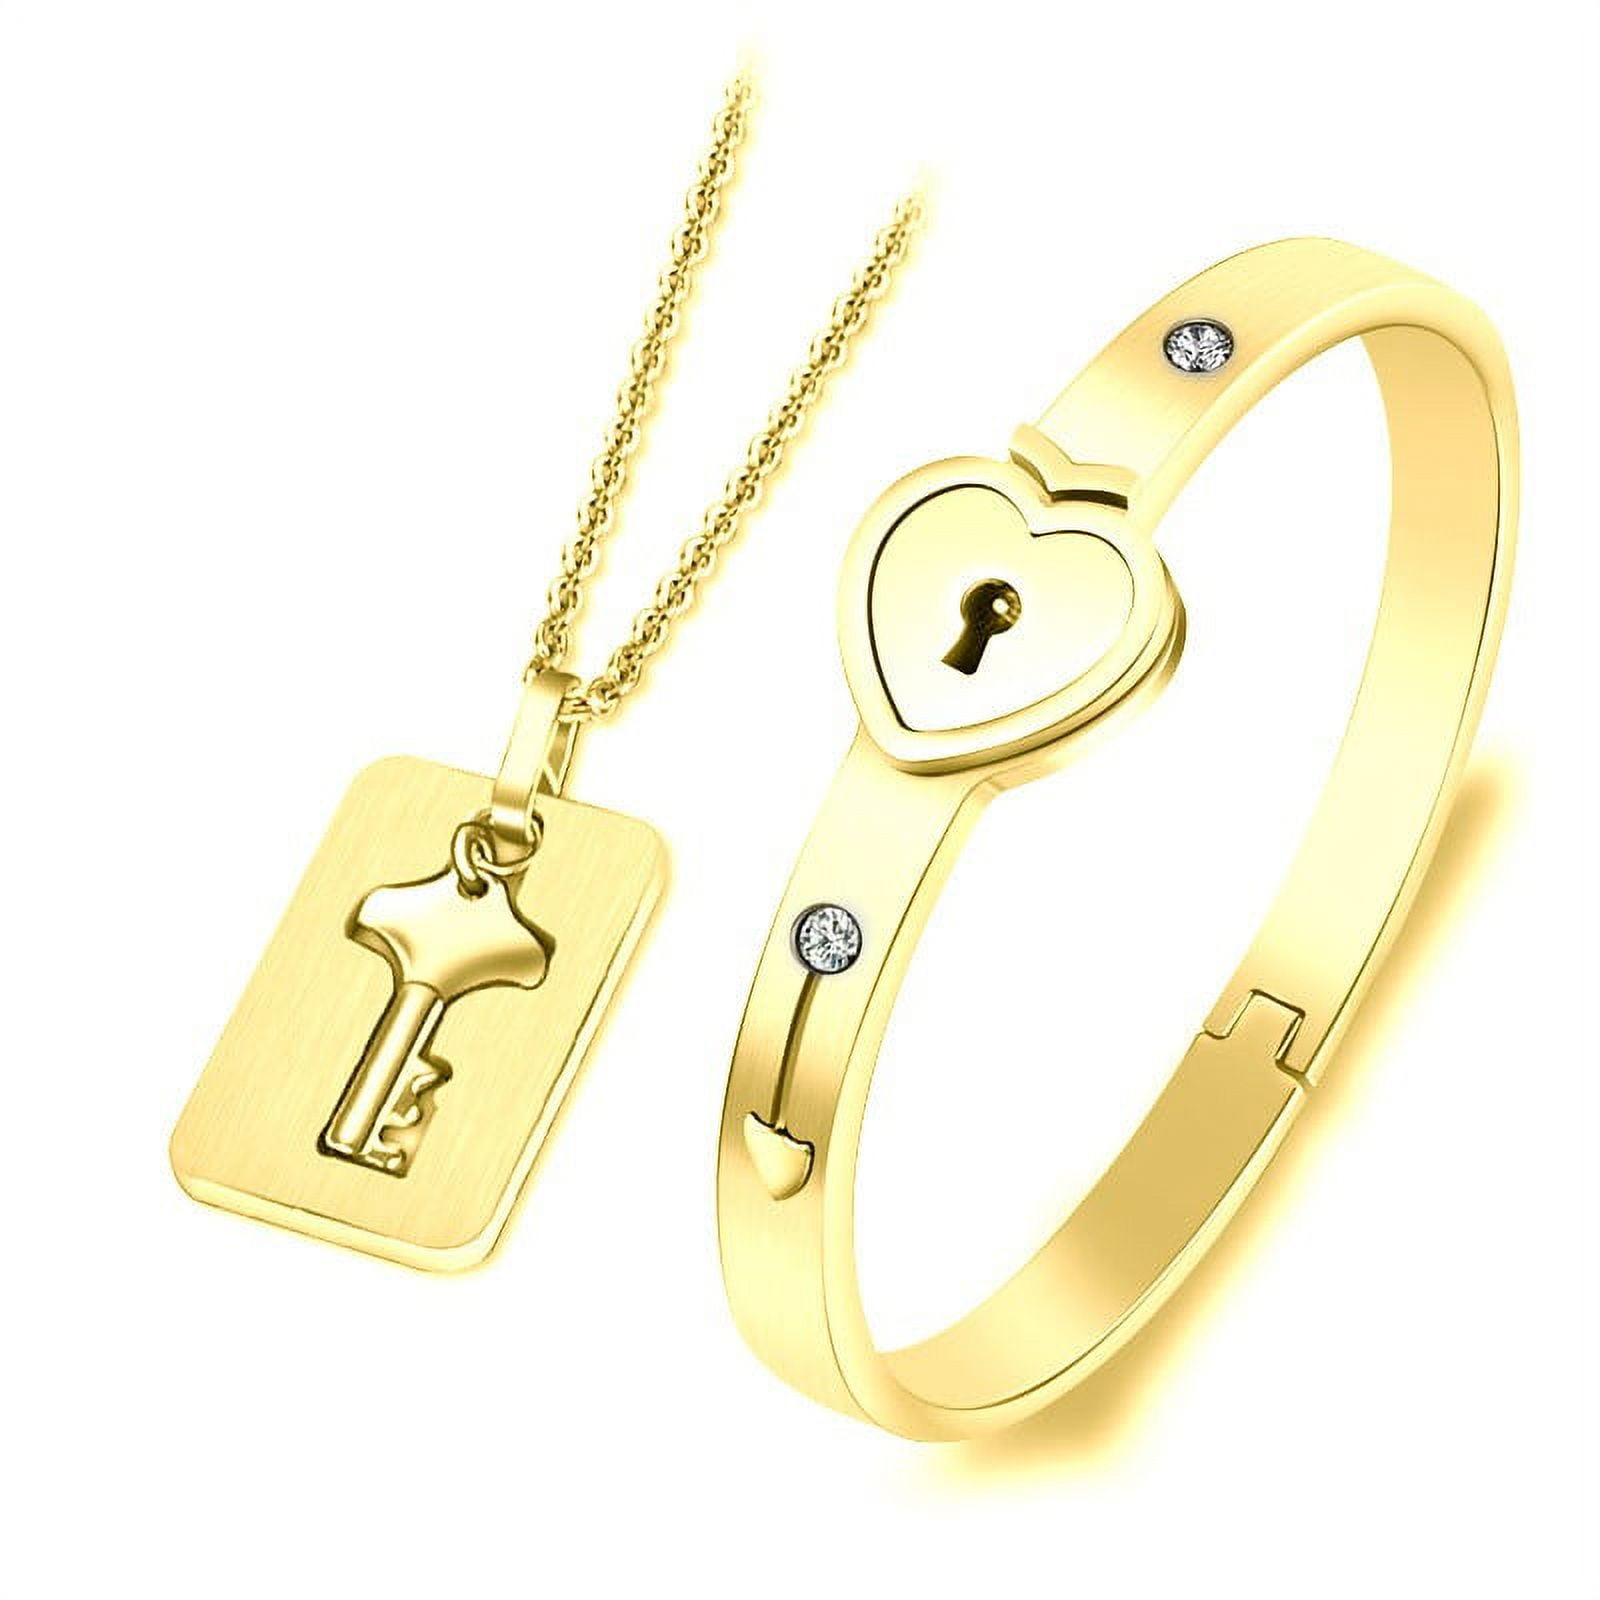 Silver Key and Heart Lock Bracelet Stock Photo - Image of bracelet,  accessory: 22752468